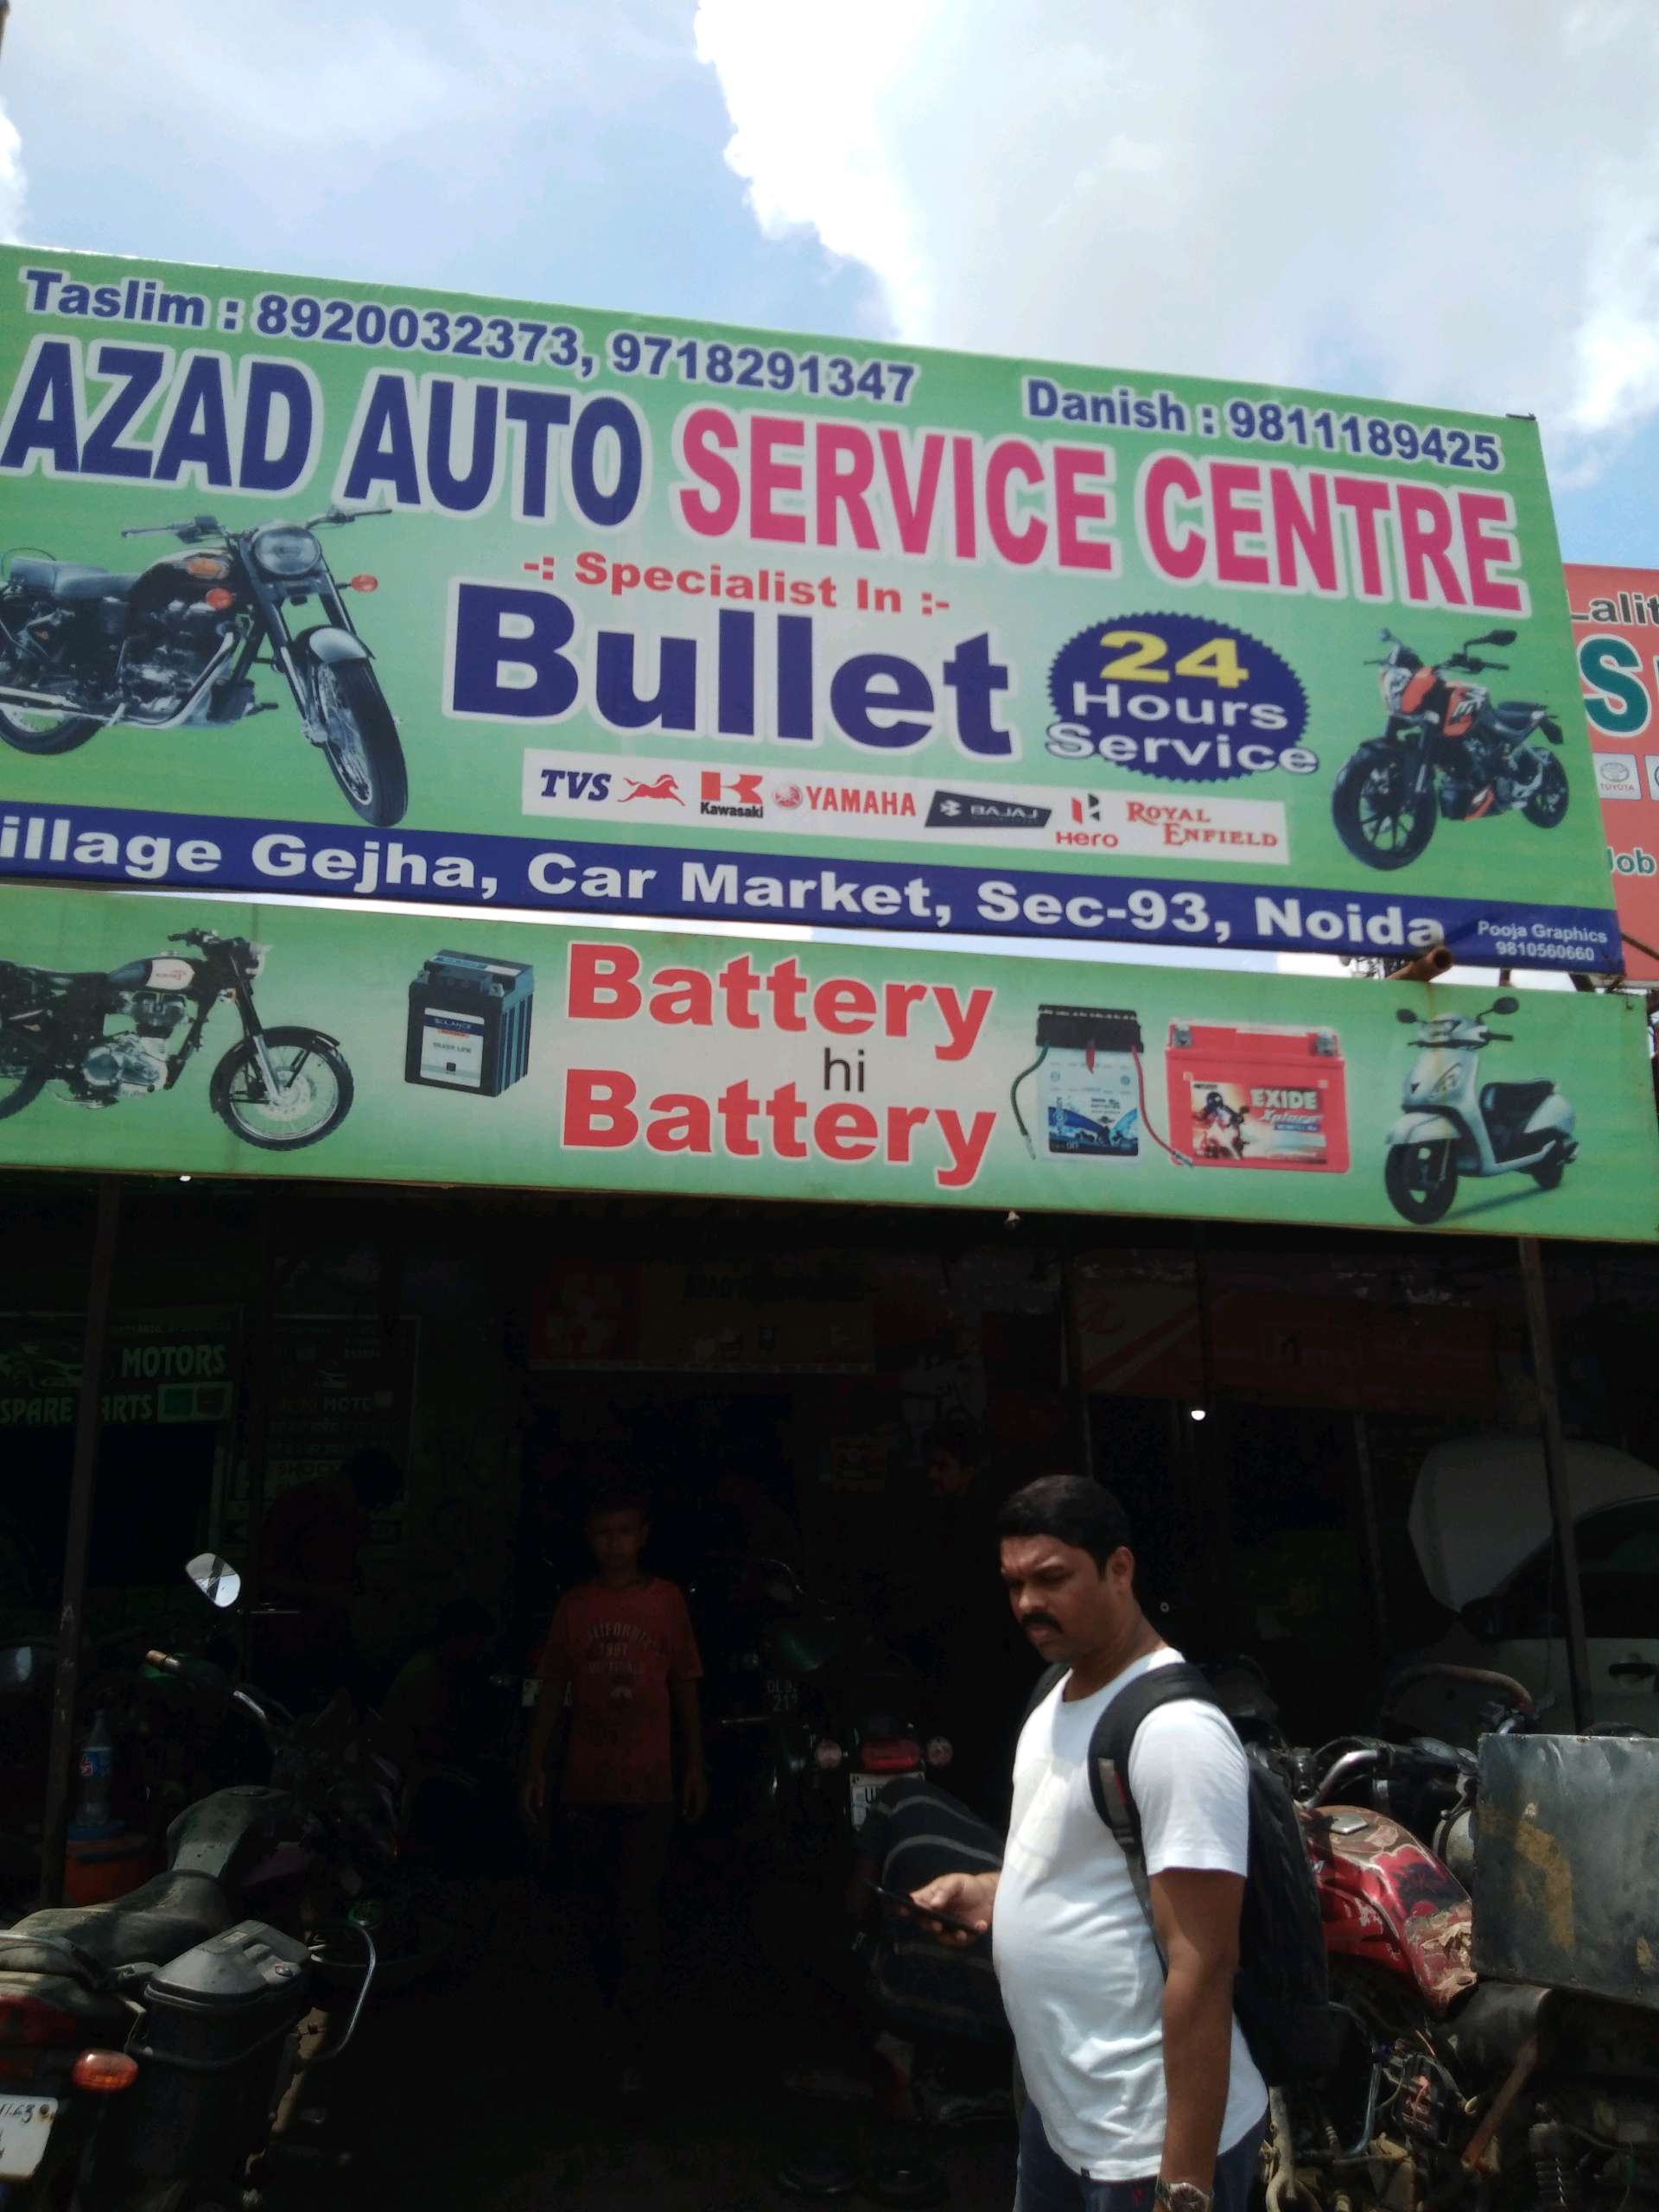 Azad Auto Service Centre